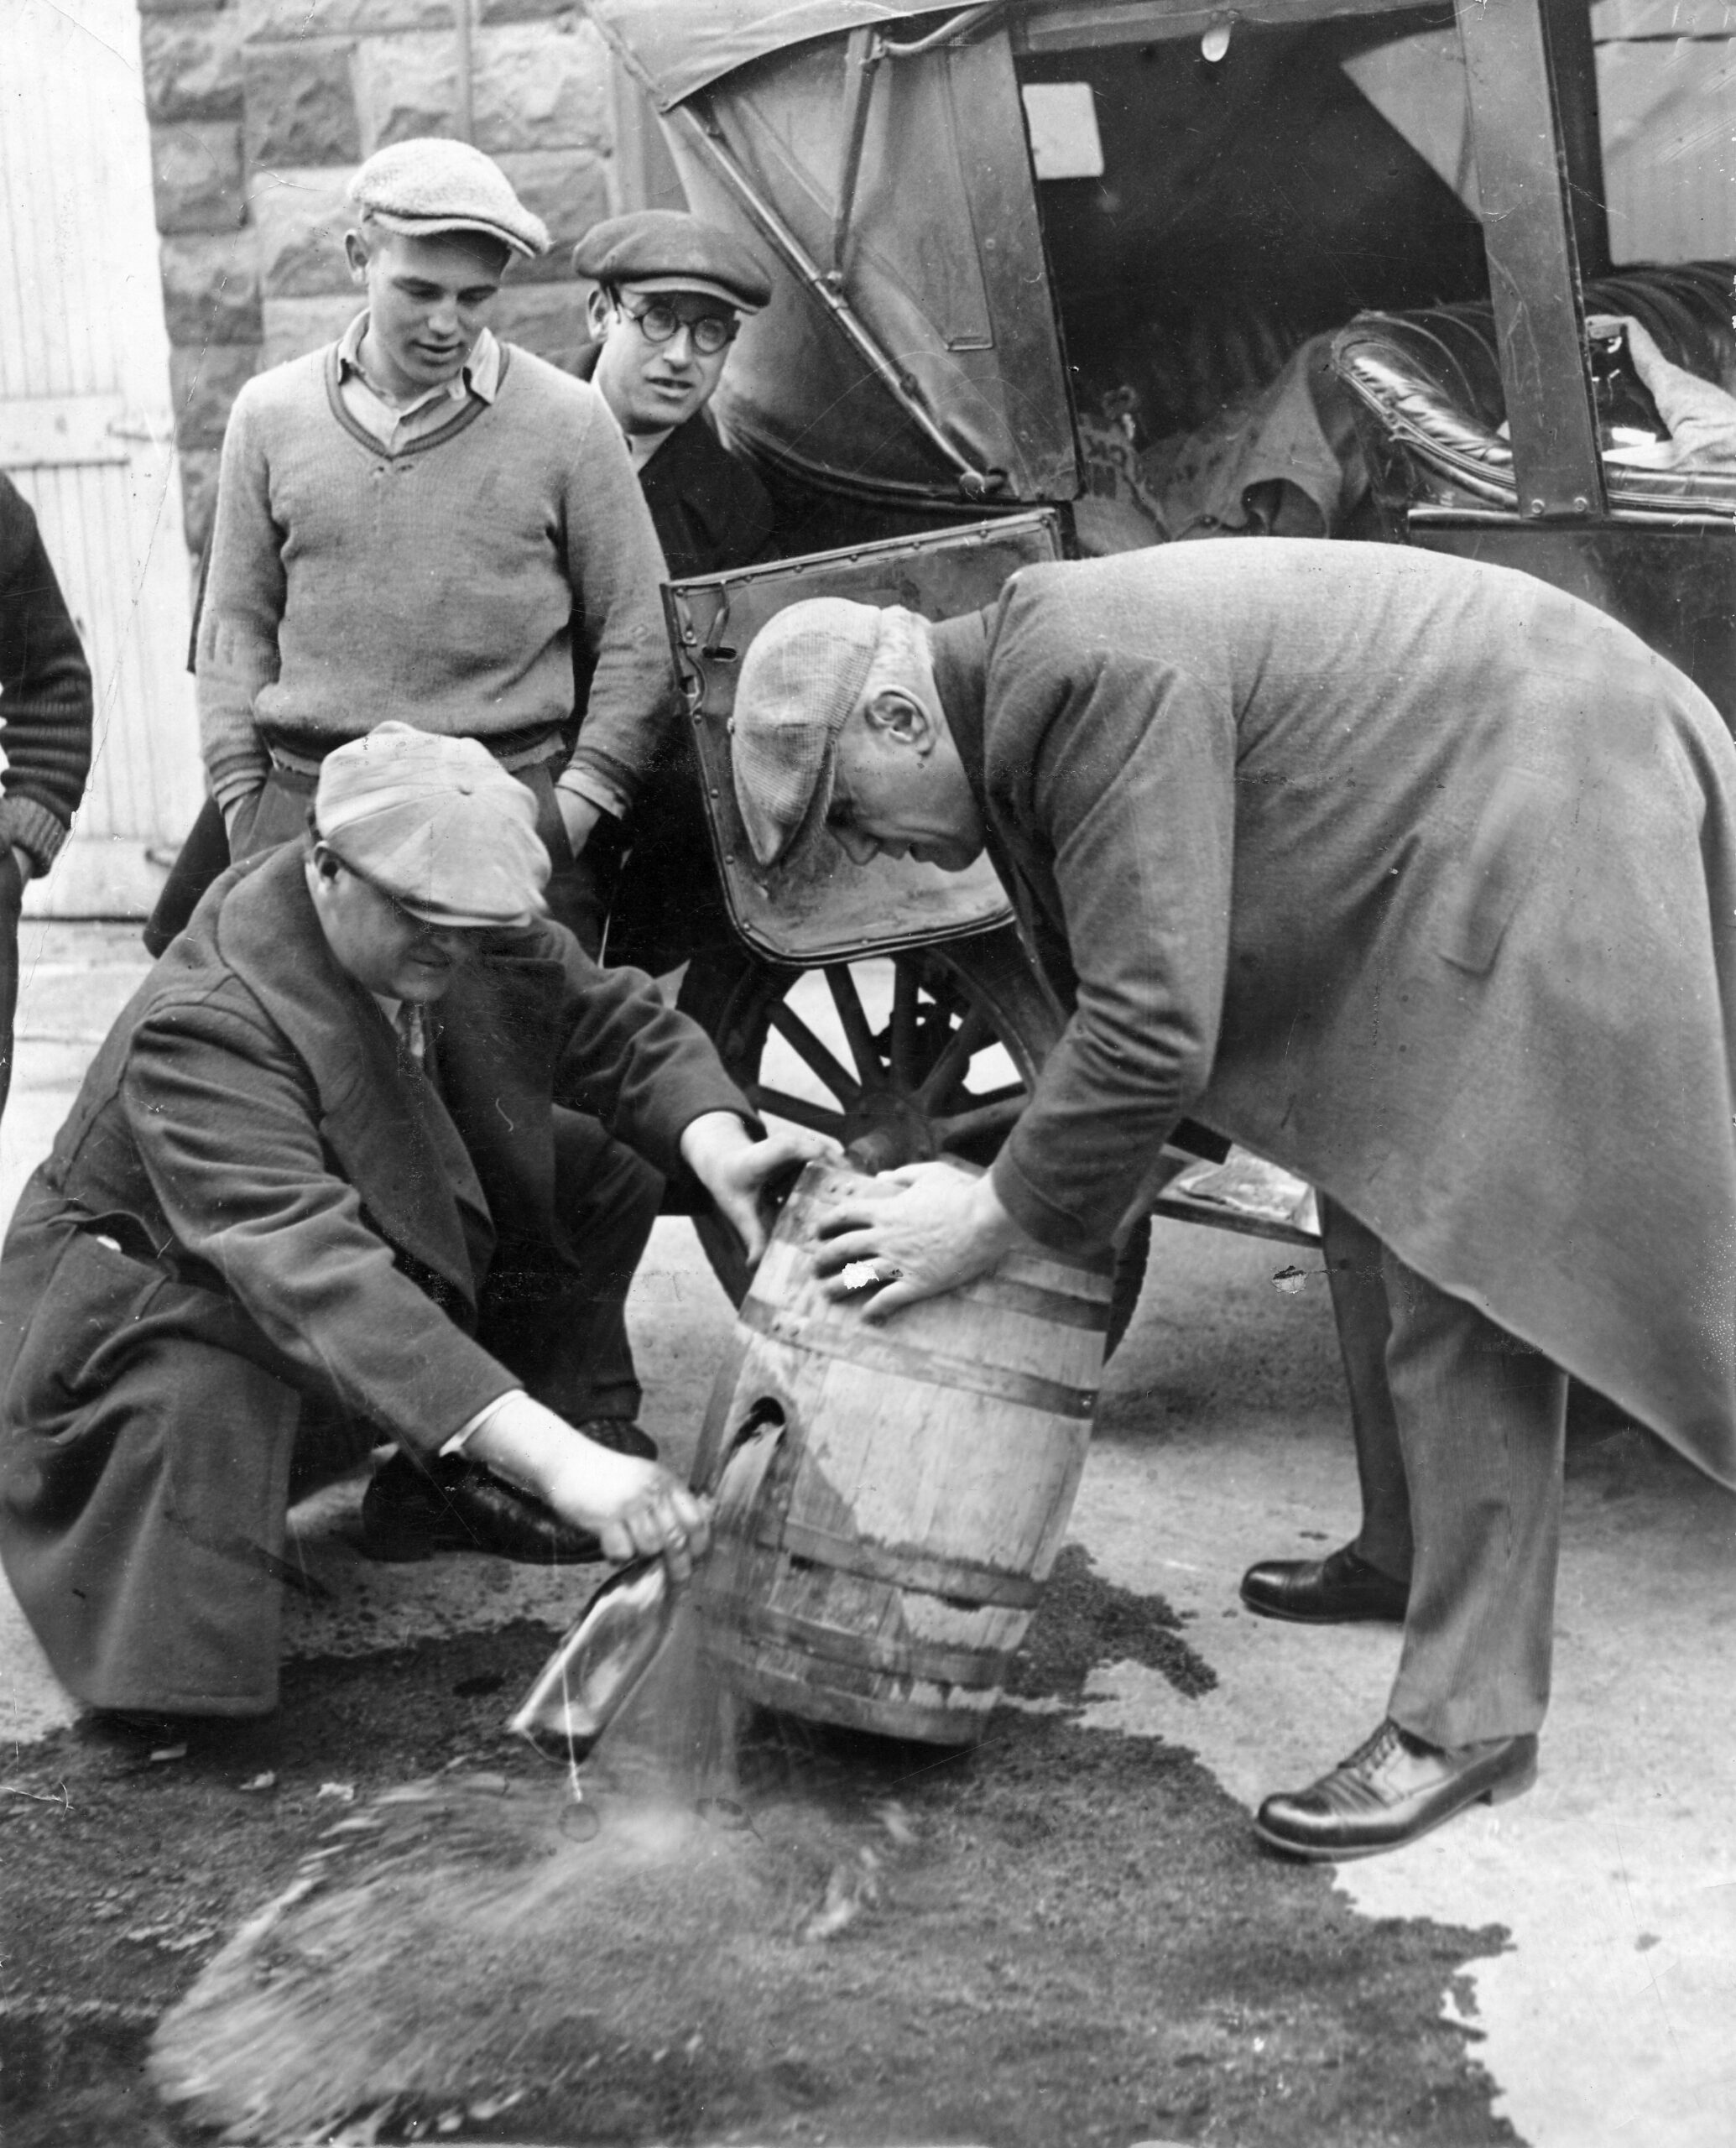 Prohibition agents empty a bootlegger's keg during an enforcement raid